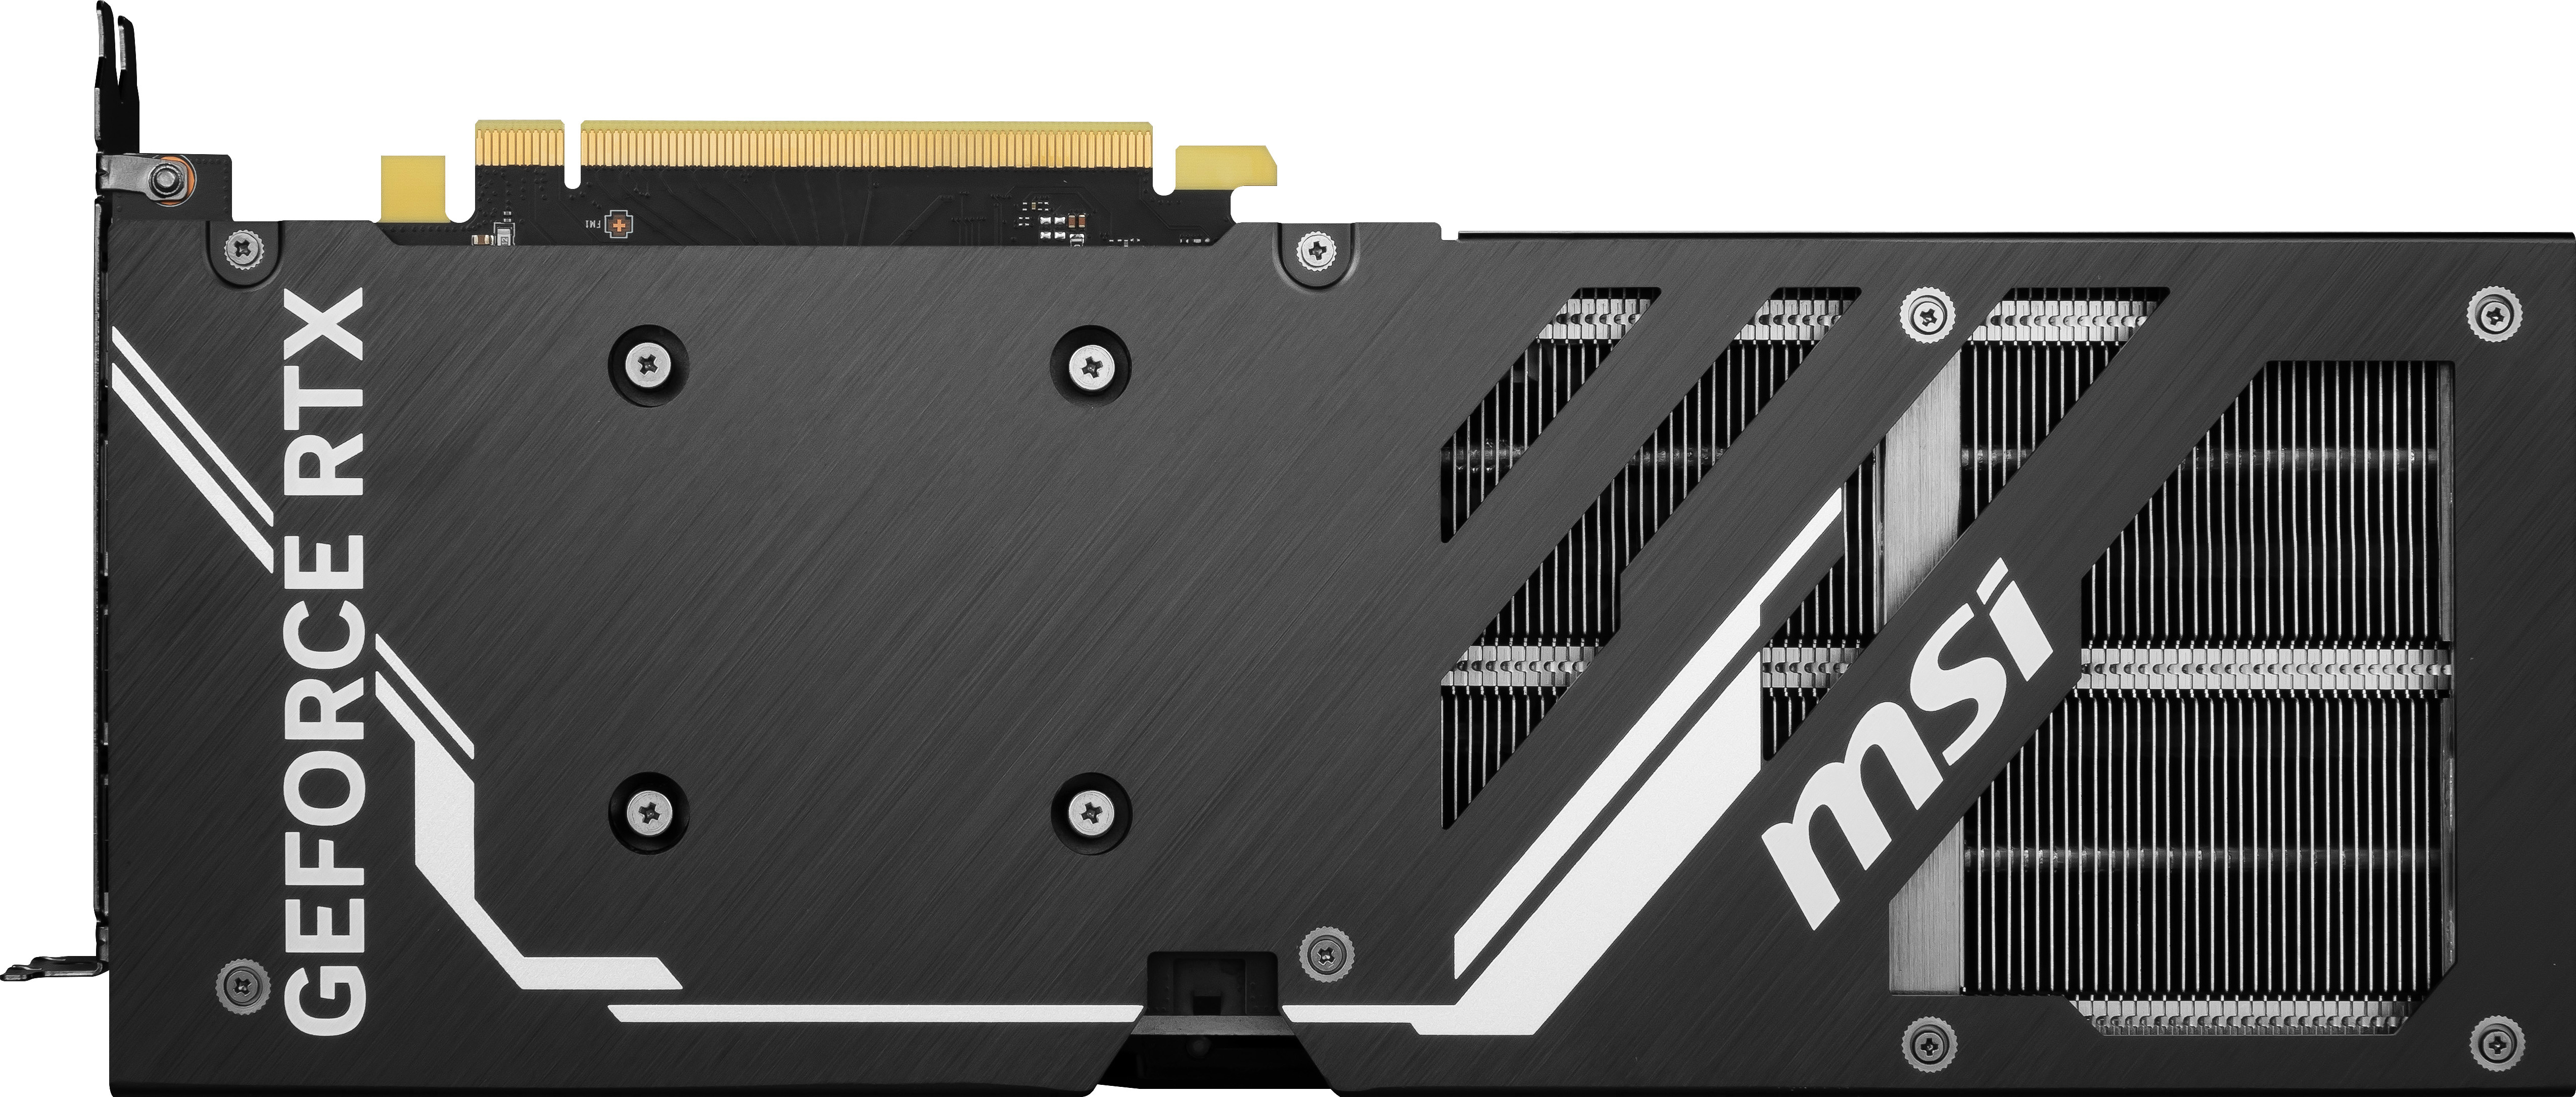 MSI GeForce RTX 4060 Ti VENTUS 3X OC 8GB Graphics Card